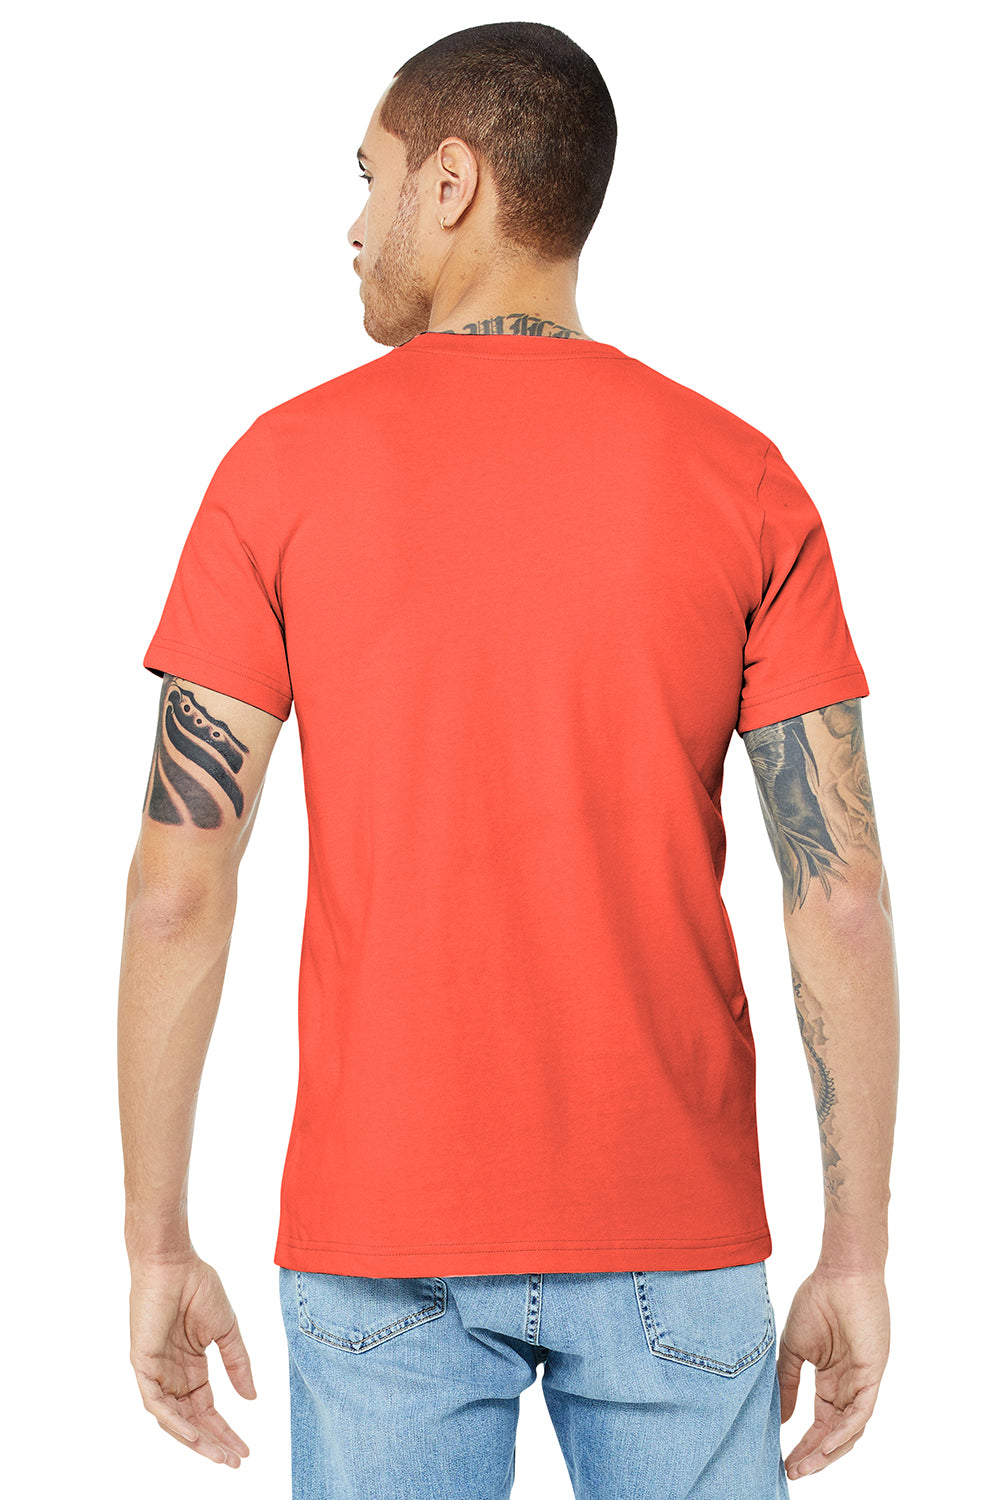 Bella + Canvas BC3001/3001C Mens Jersey Short Sleeve Crewneck T-Shirt Coral Model Back